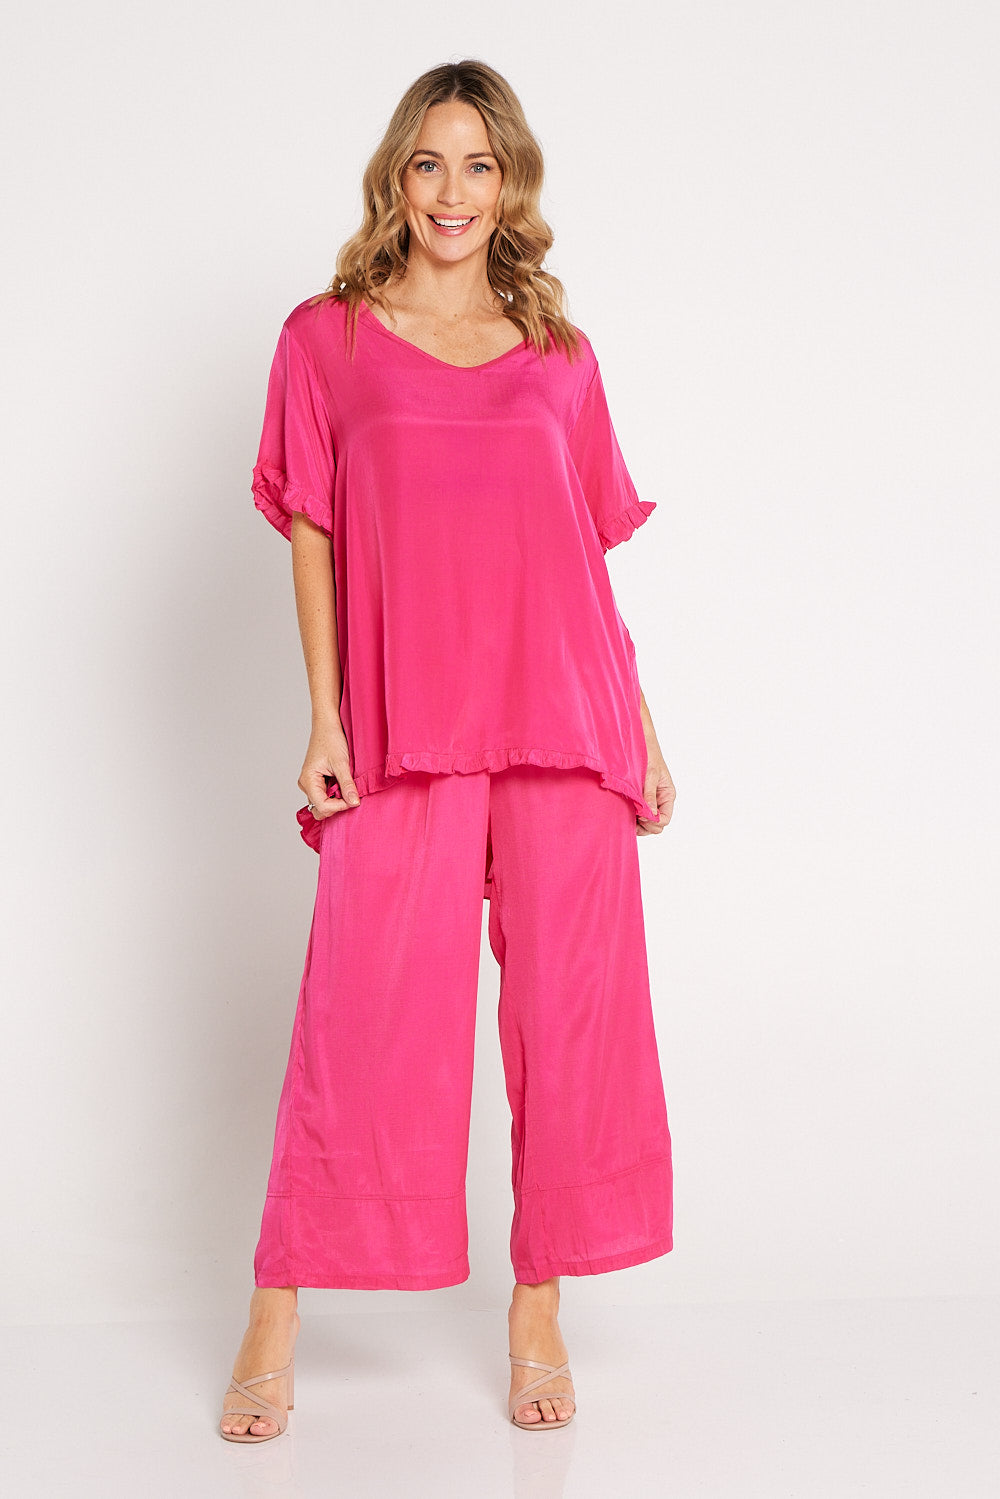 Robyn Pants - Hot Pink – TULIO Fashion